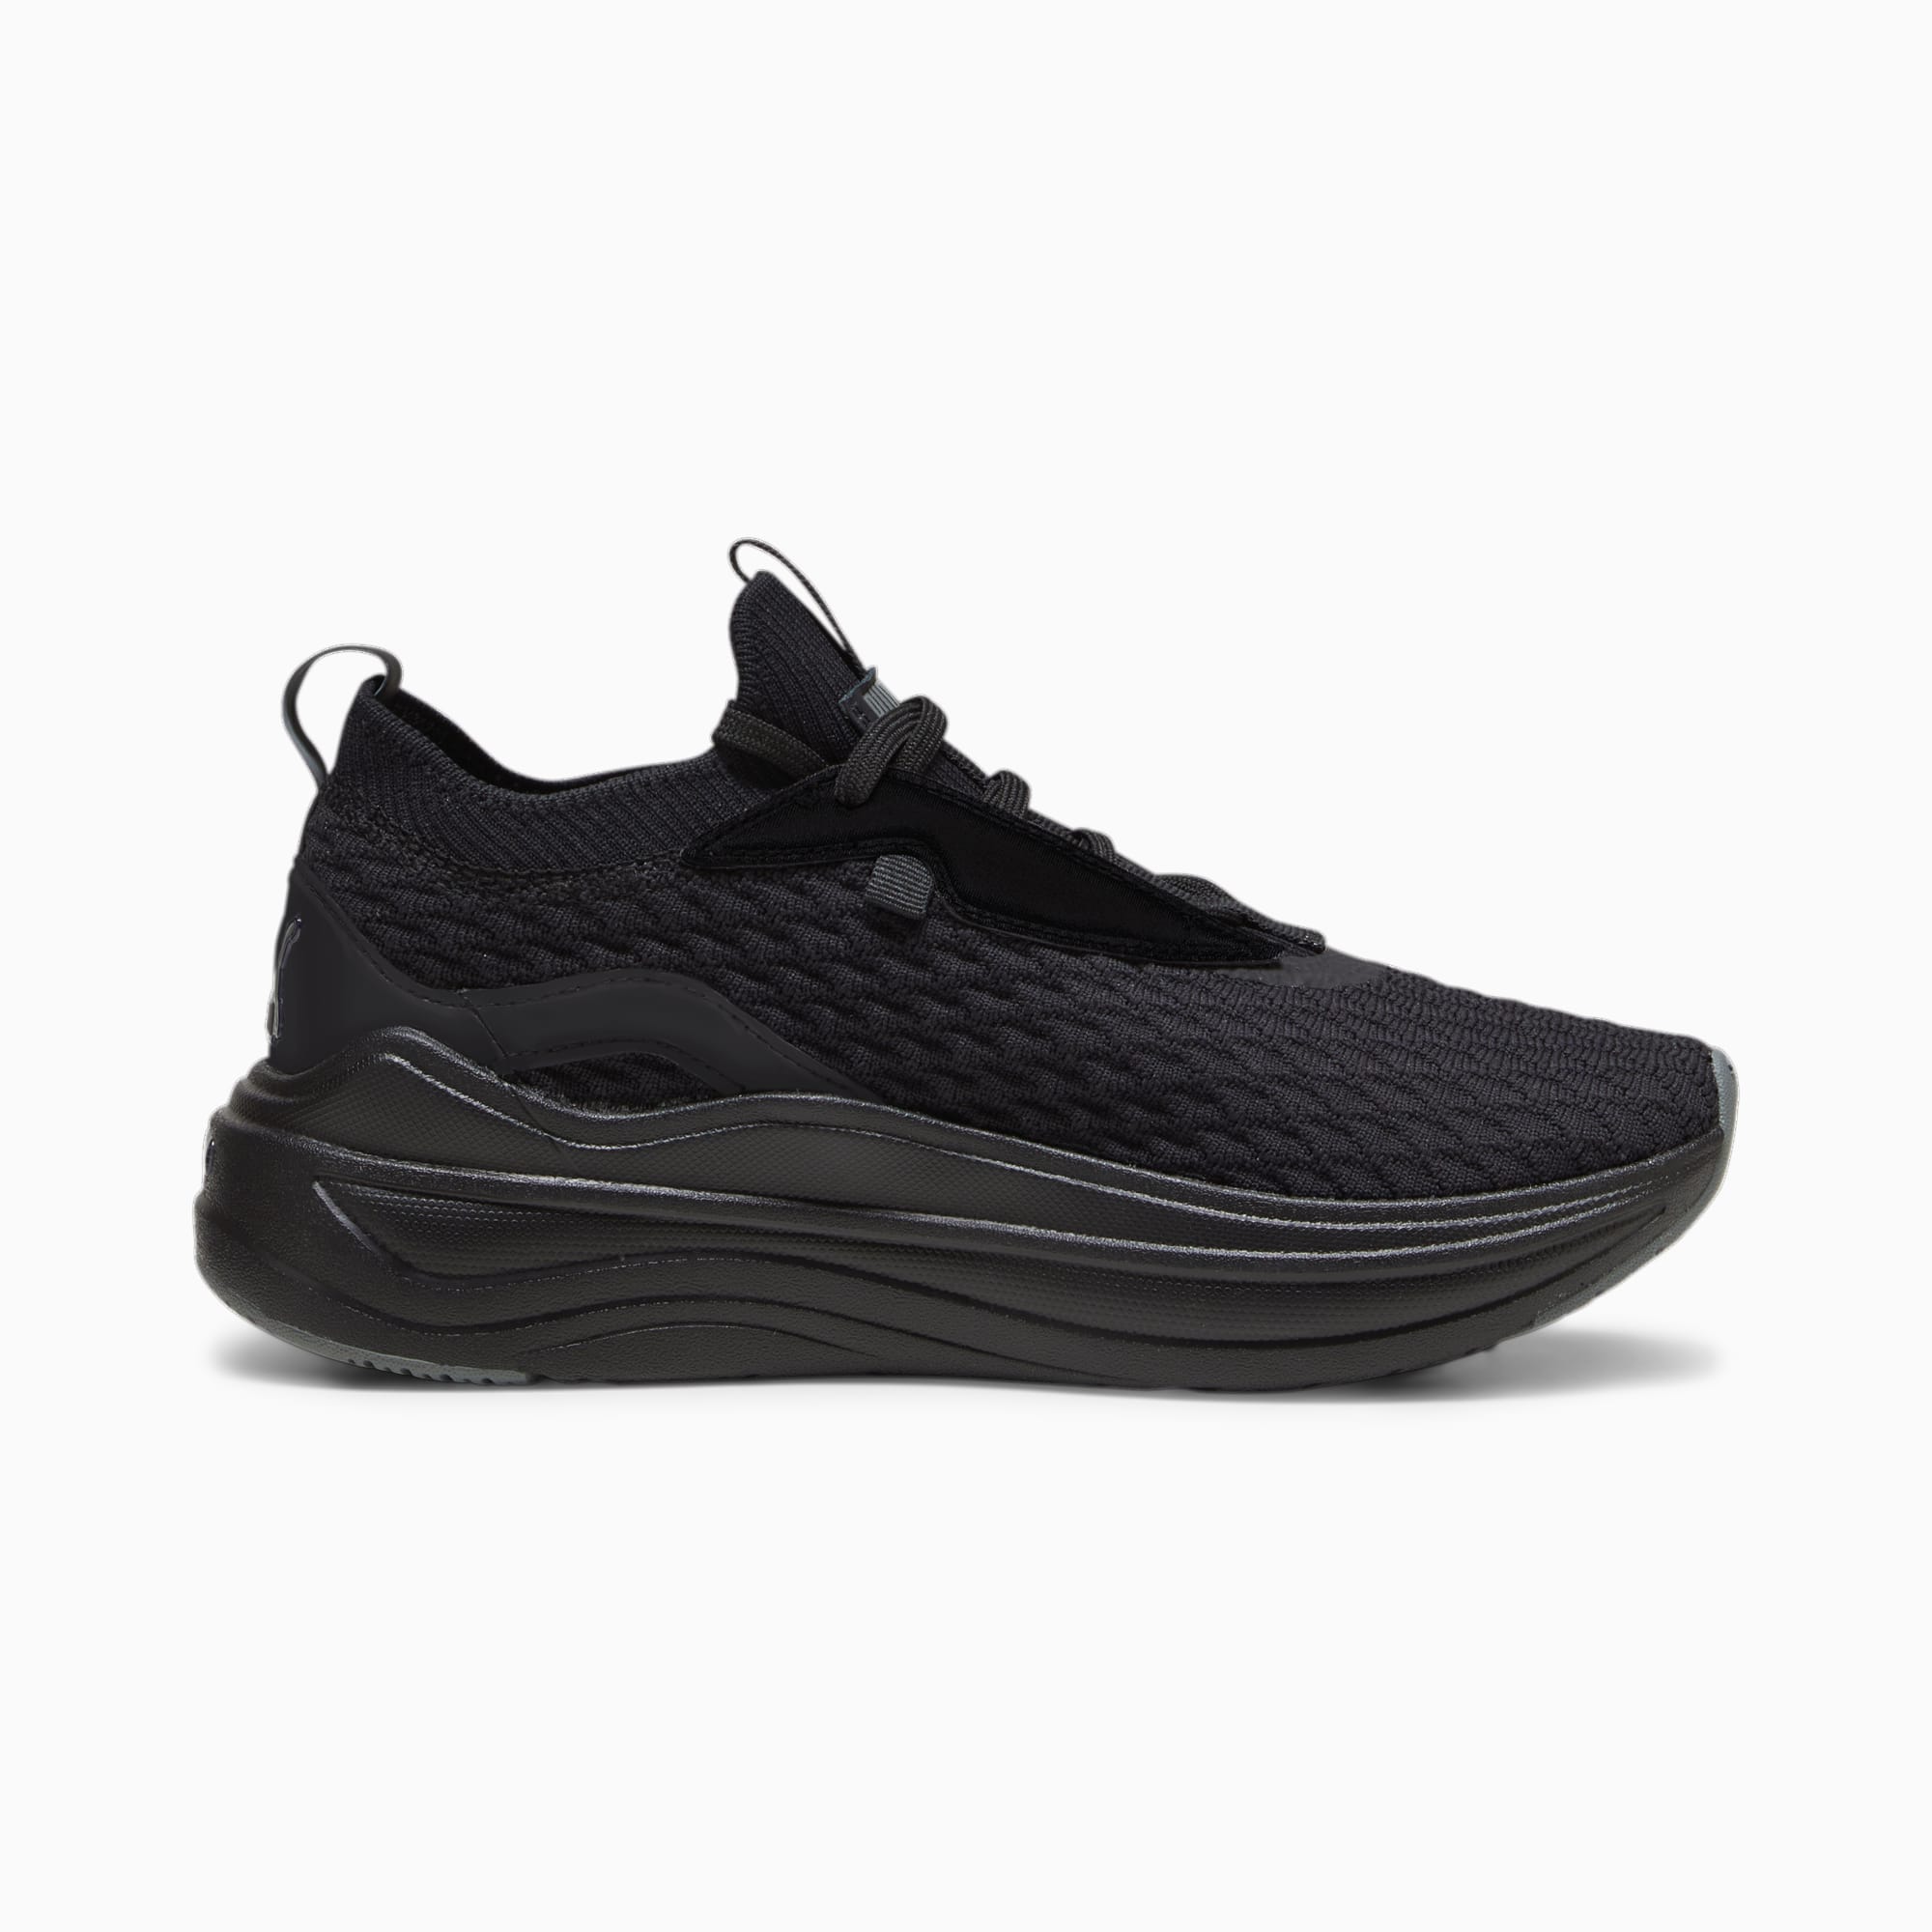 PUMA Softride Stakd Premium Women's Running Shoe Sneakers, Black/Cool Dark Grey, Size 35,5, Shoes